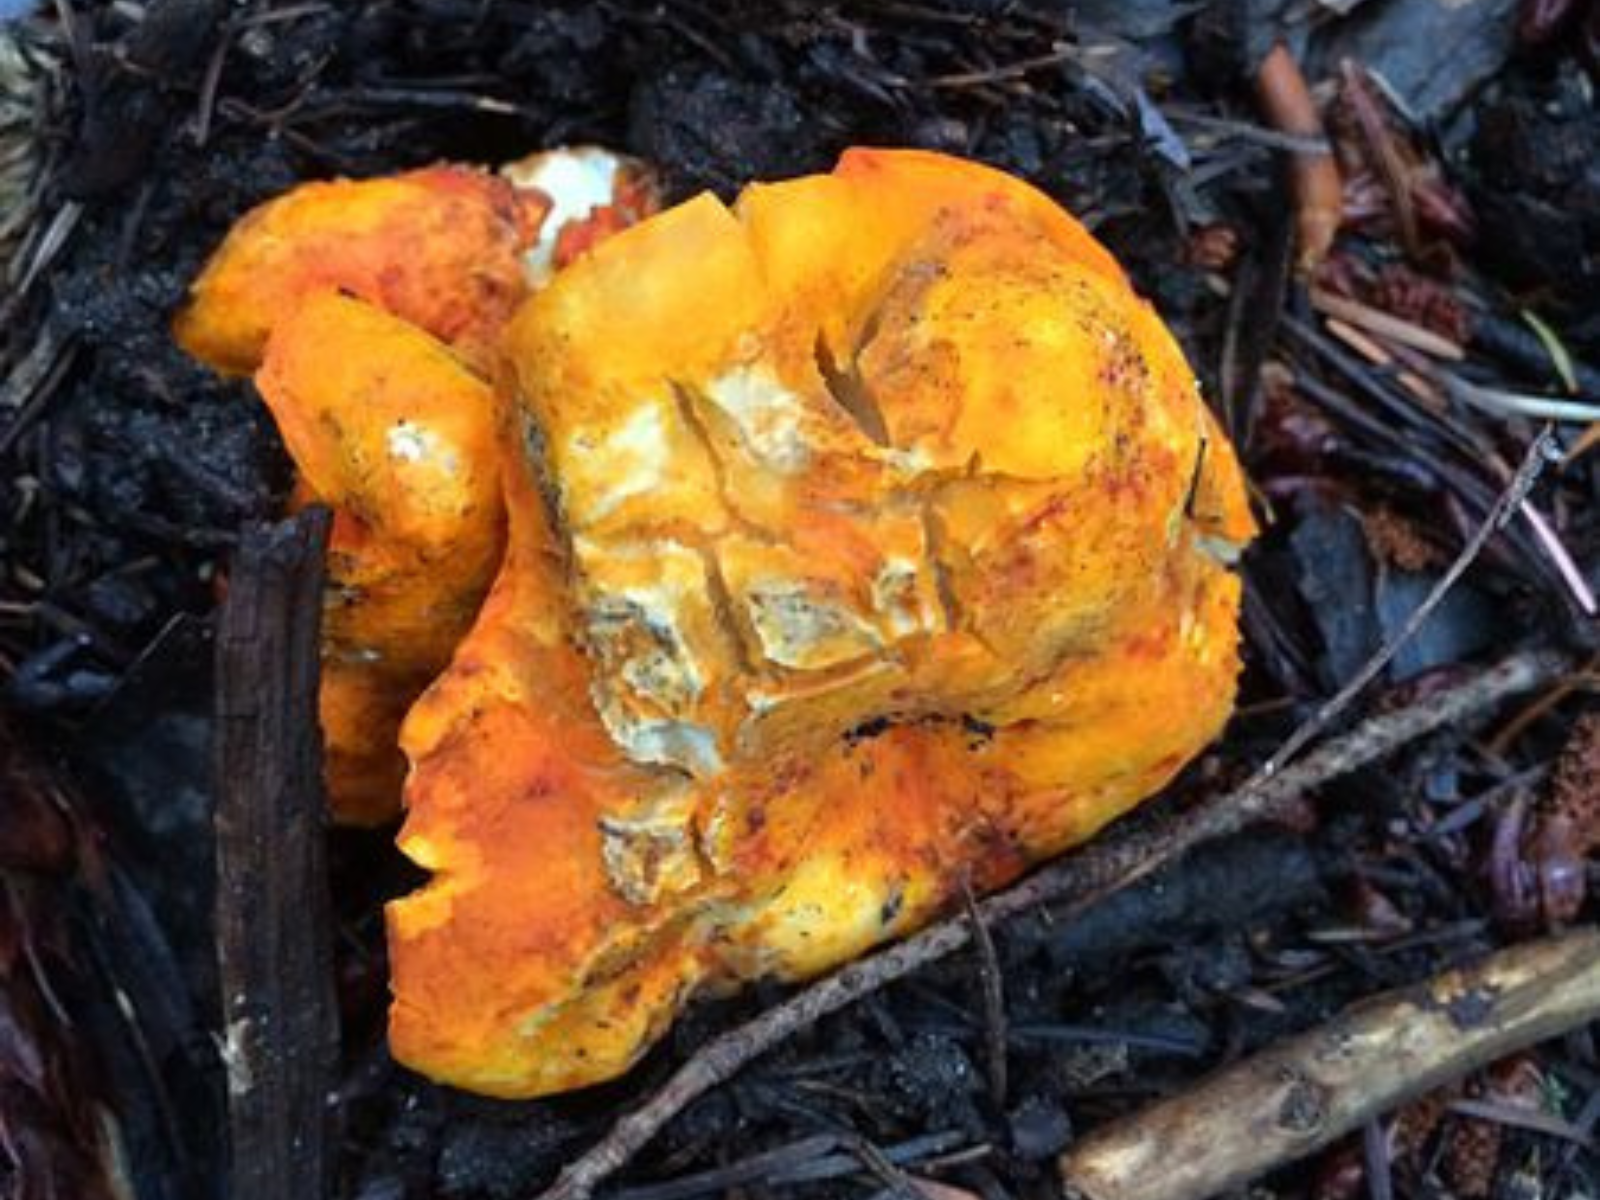 An orange mushroom growing in dark damp earth near sticks, pinecones, and rotting leaves.